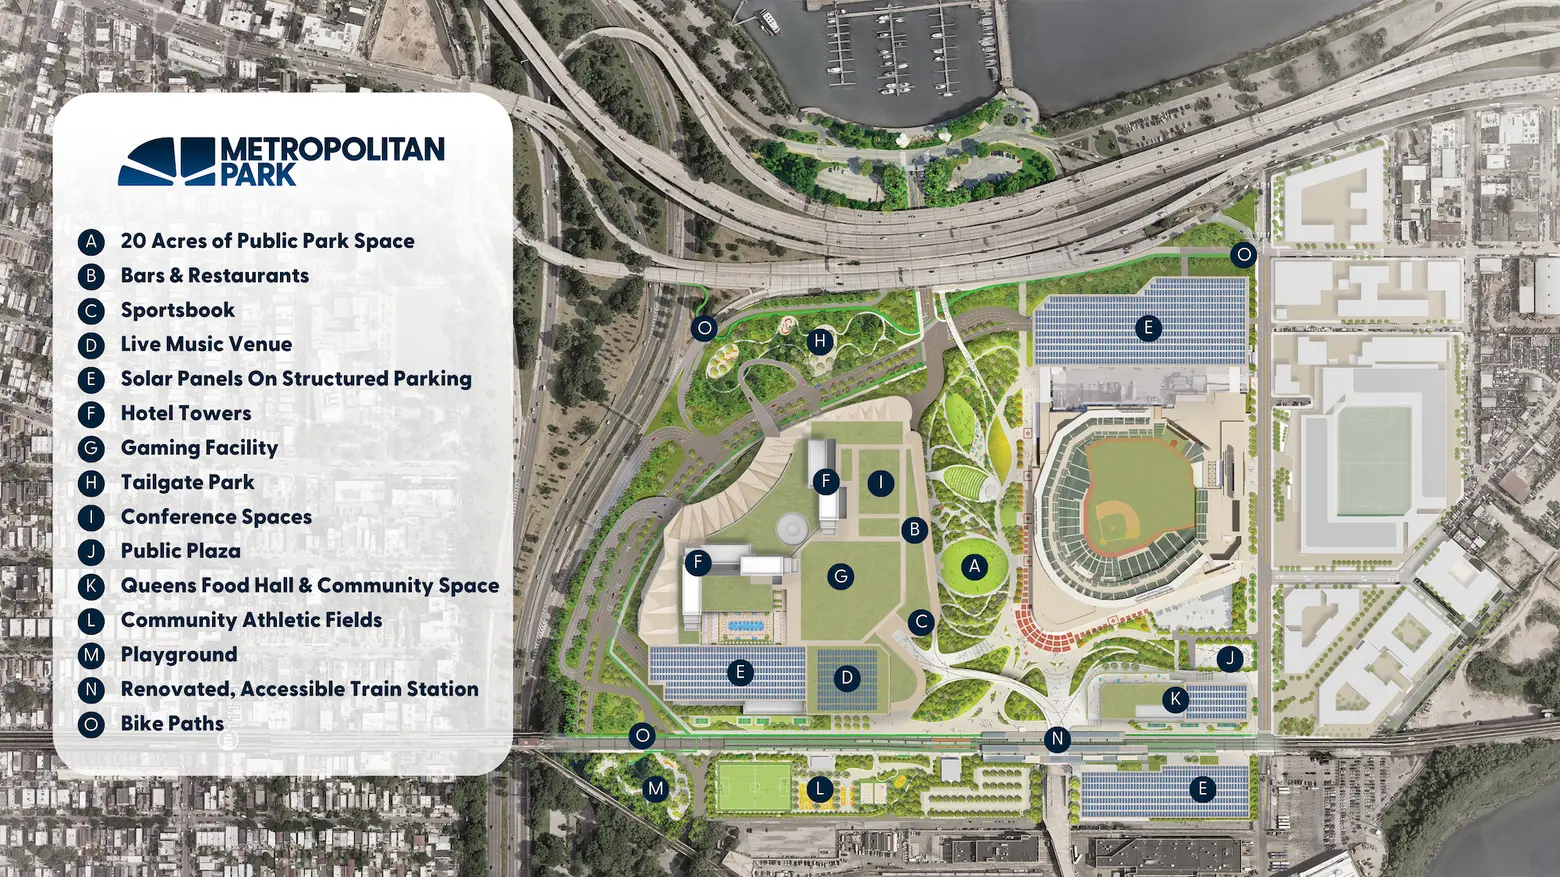 Mets owner reveals ‘Metropolitan Park’ proposal for $8B casino complex next to Citi Field